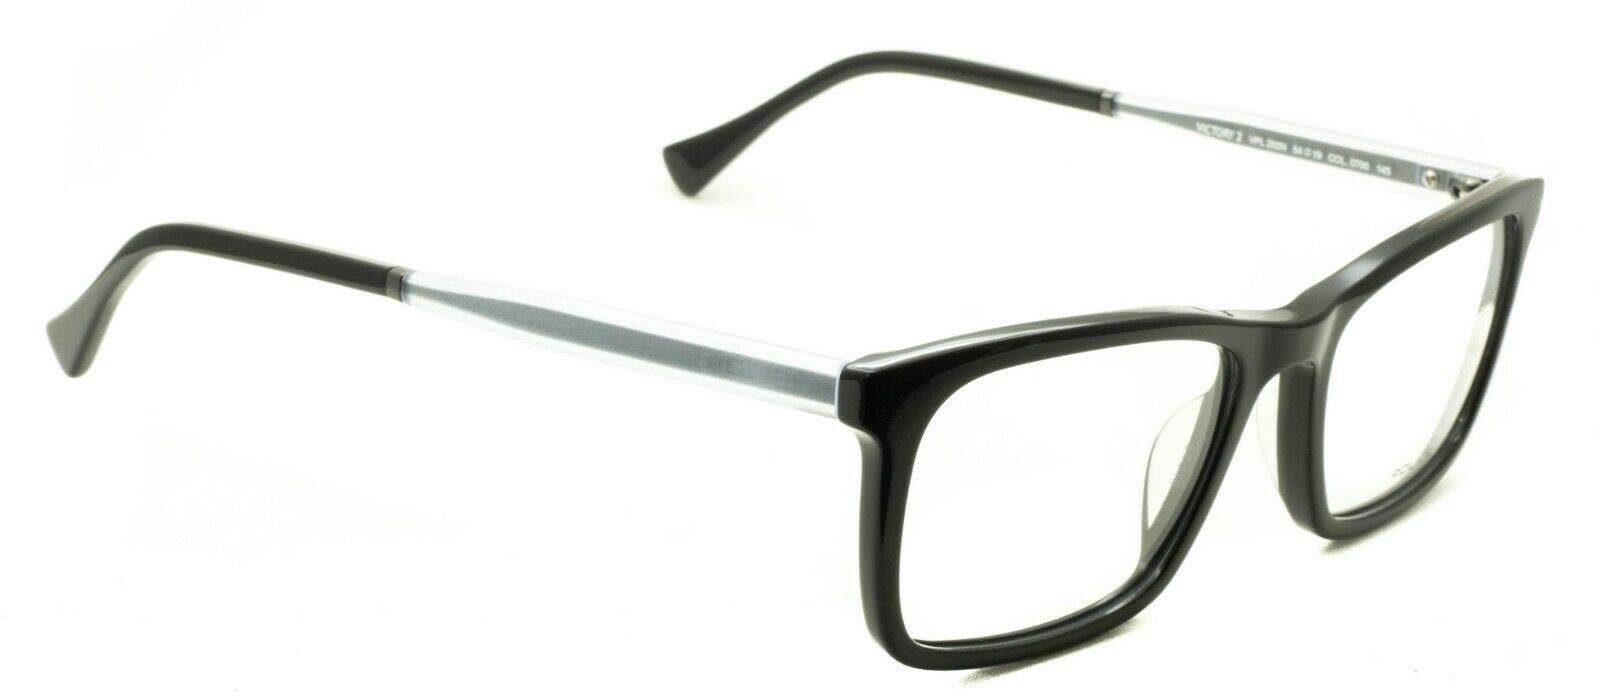 POLICE VICTORY 2 VPL 262N COL. 0700 54mm Eyewear FRAMES Glasses RX Optical - New